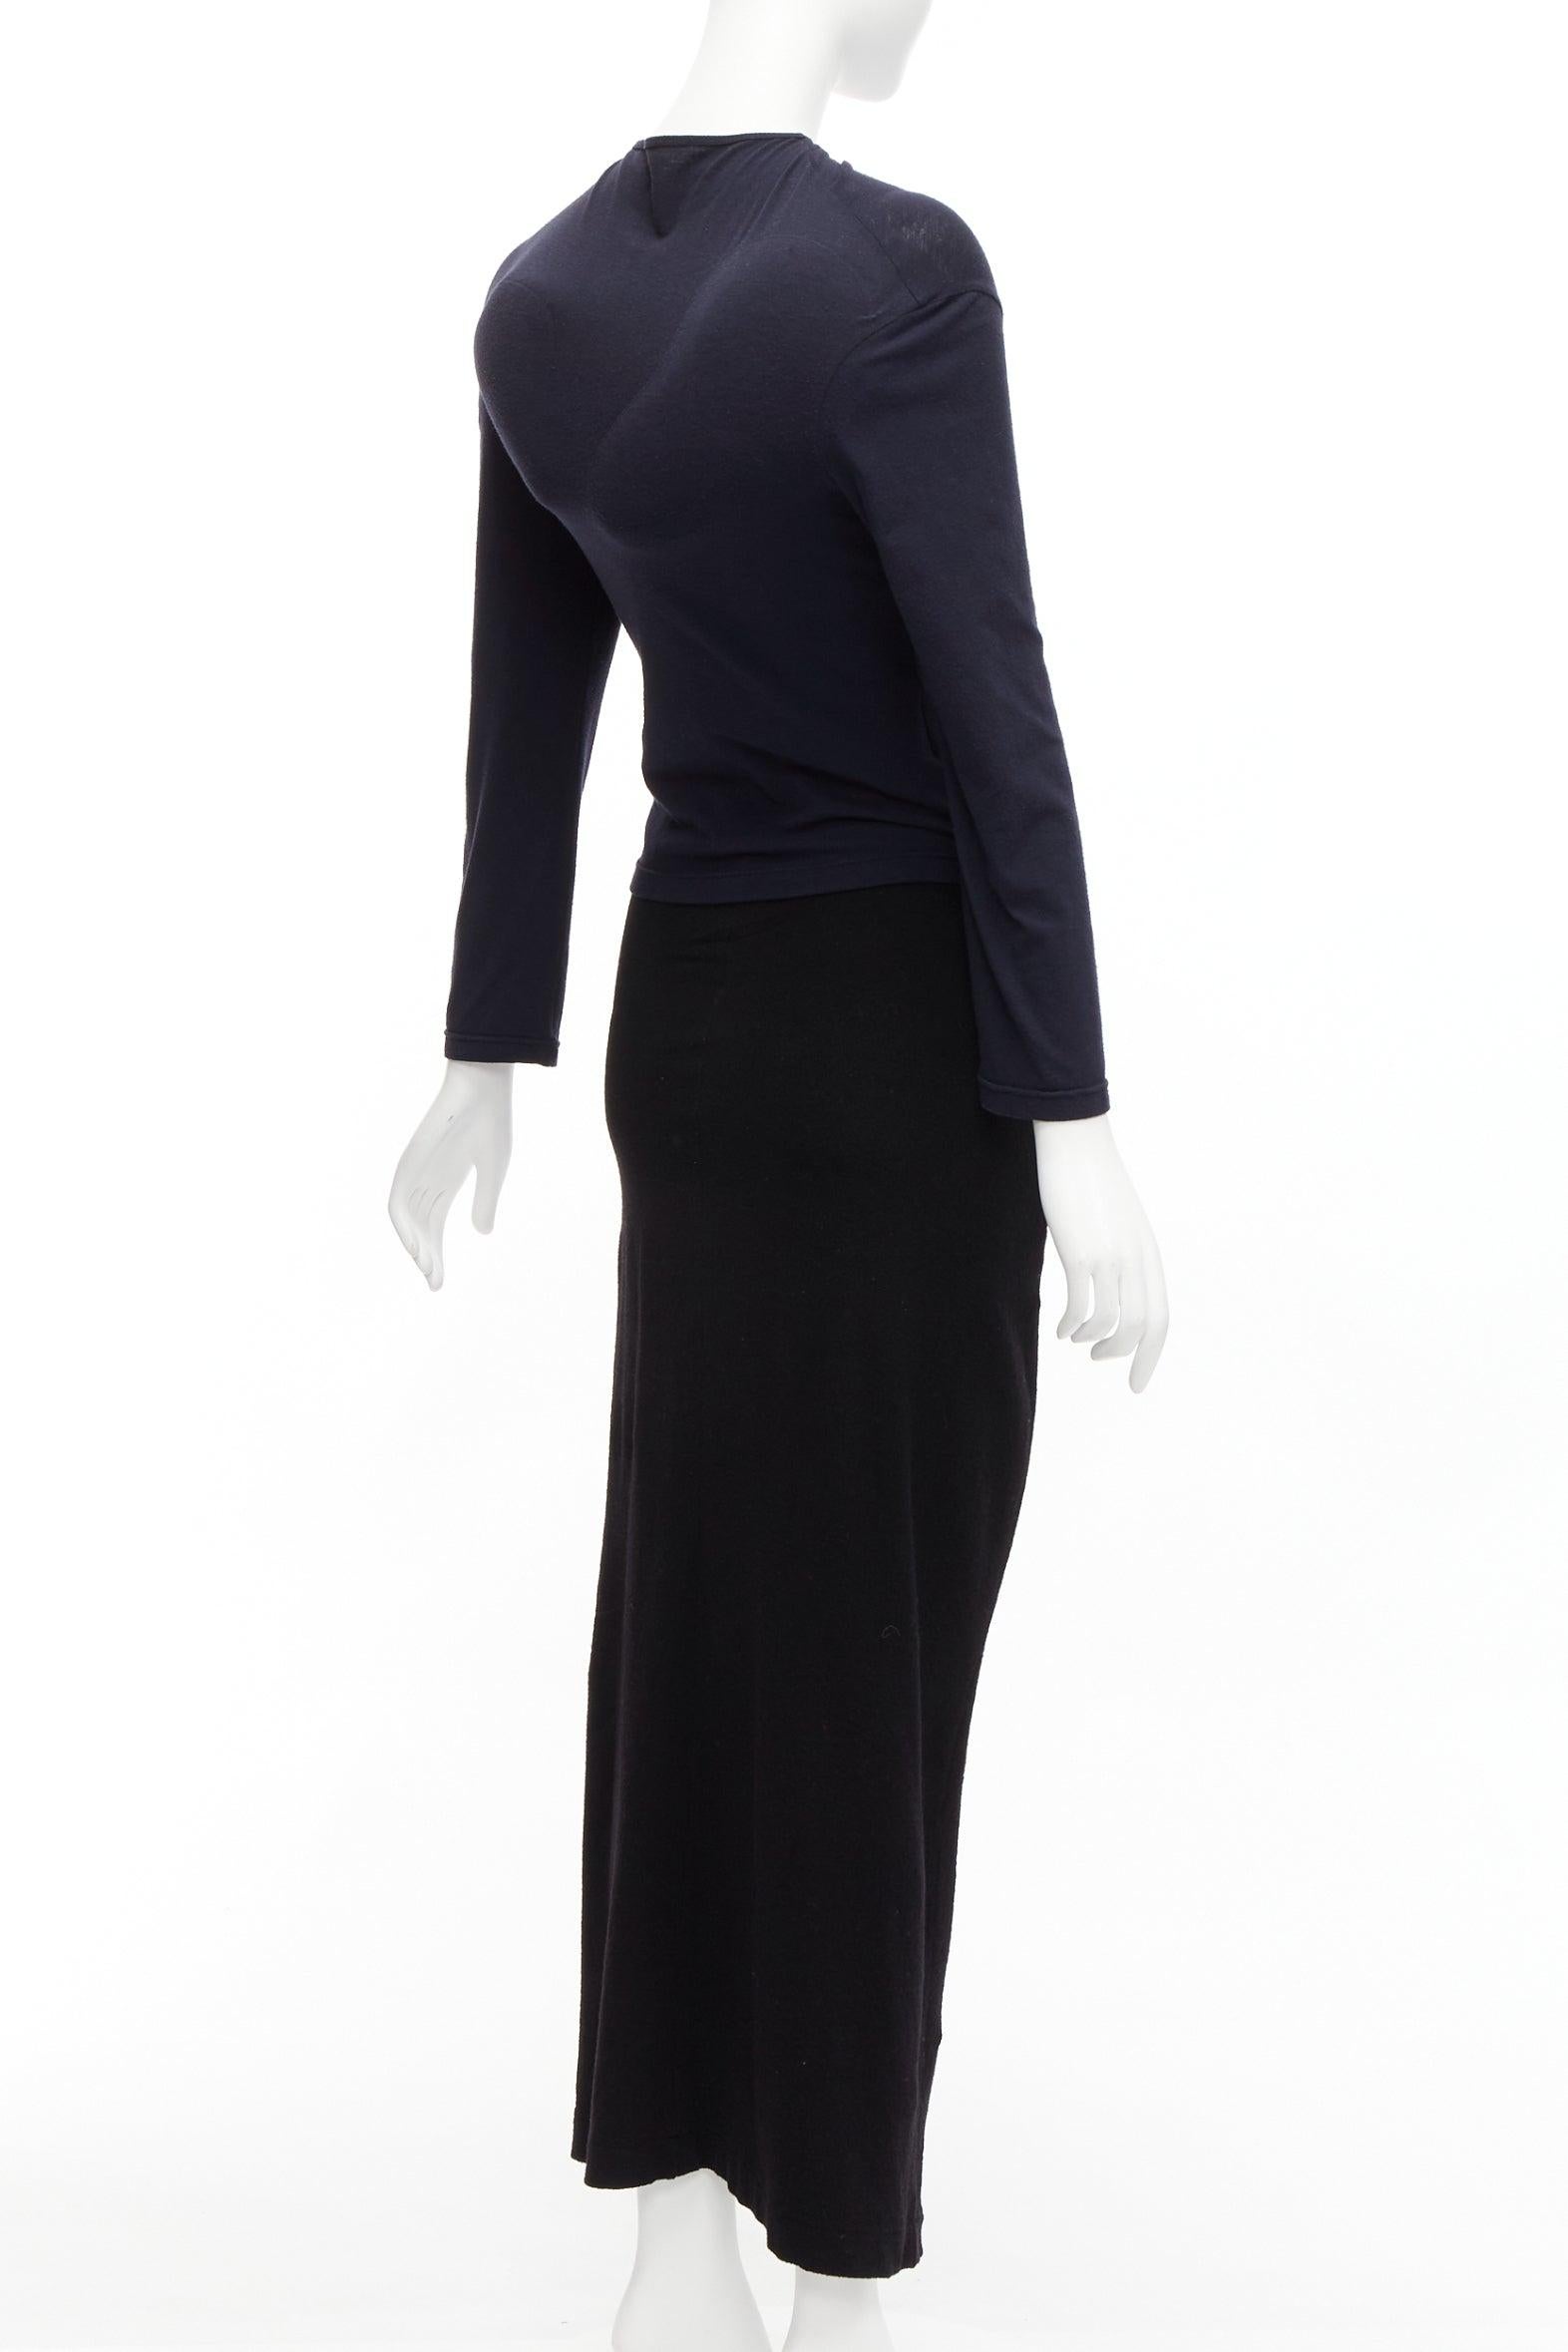 COMME DES GARCONS 1997 Lumps Bumps black padded irregular top gathered skirt M For Sale 4